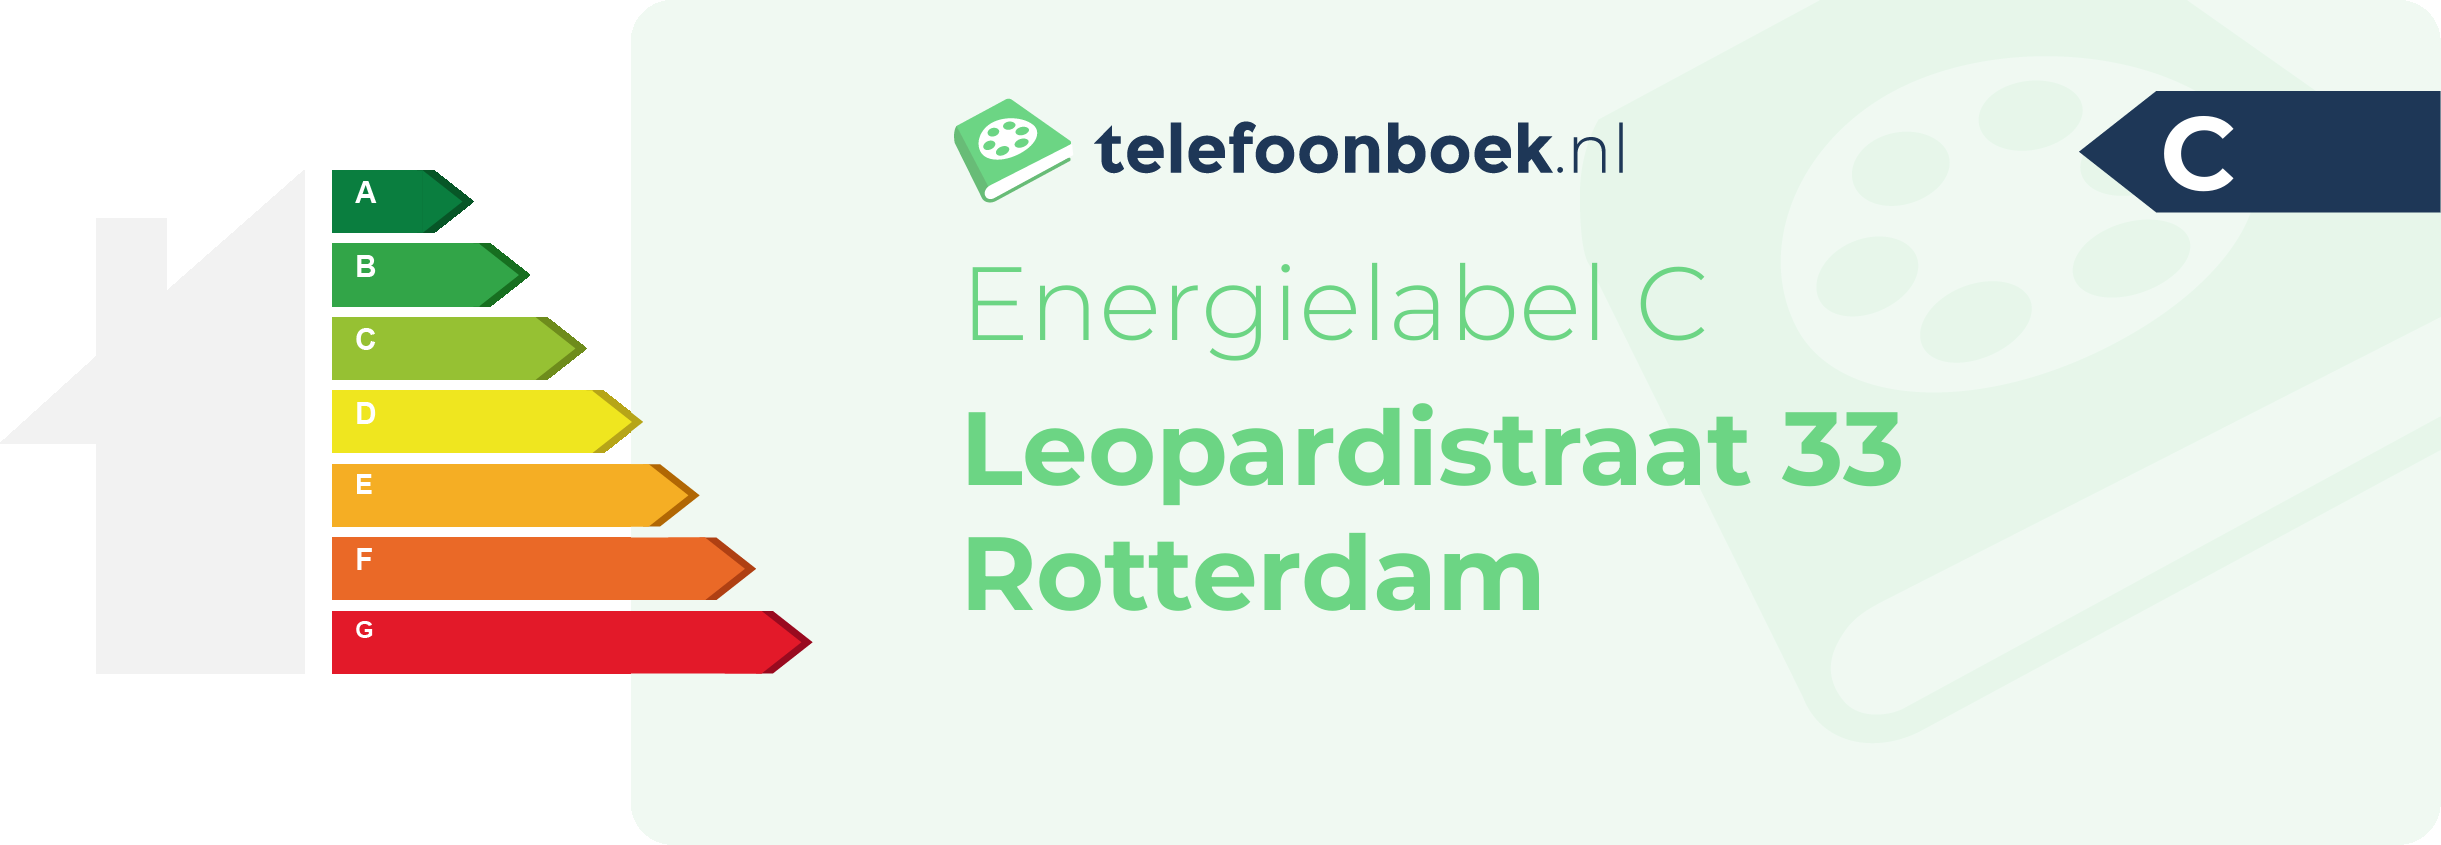 Energielabel Leopardistraat 33 Rotterdam